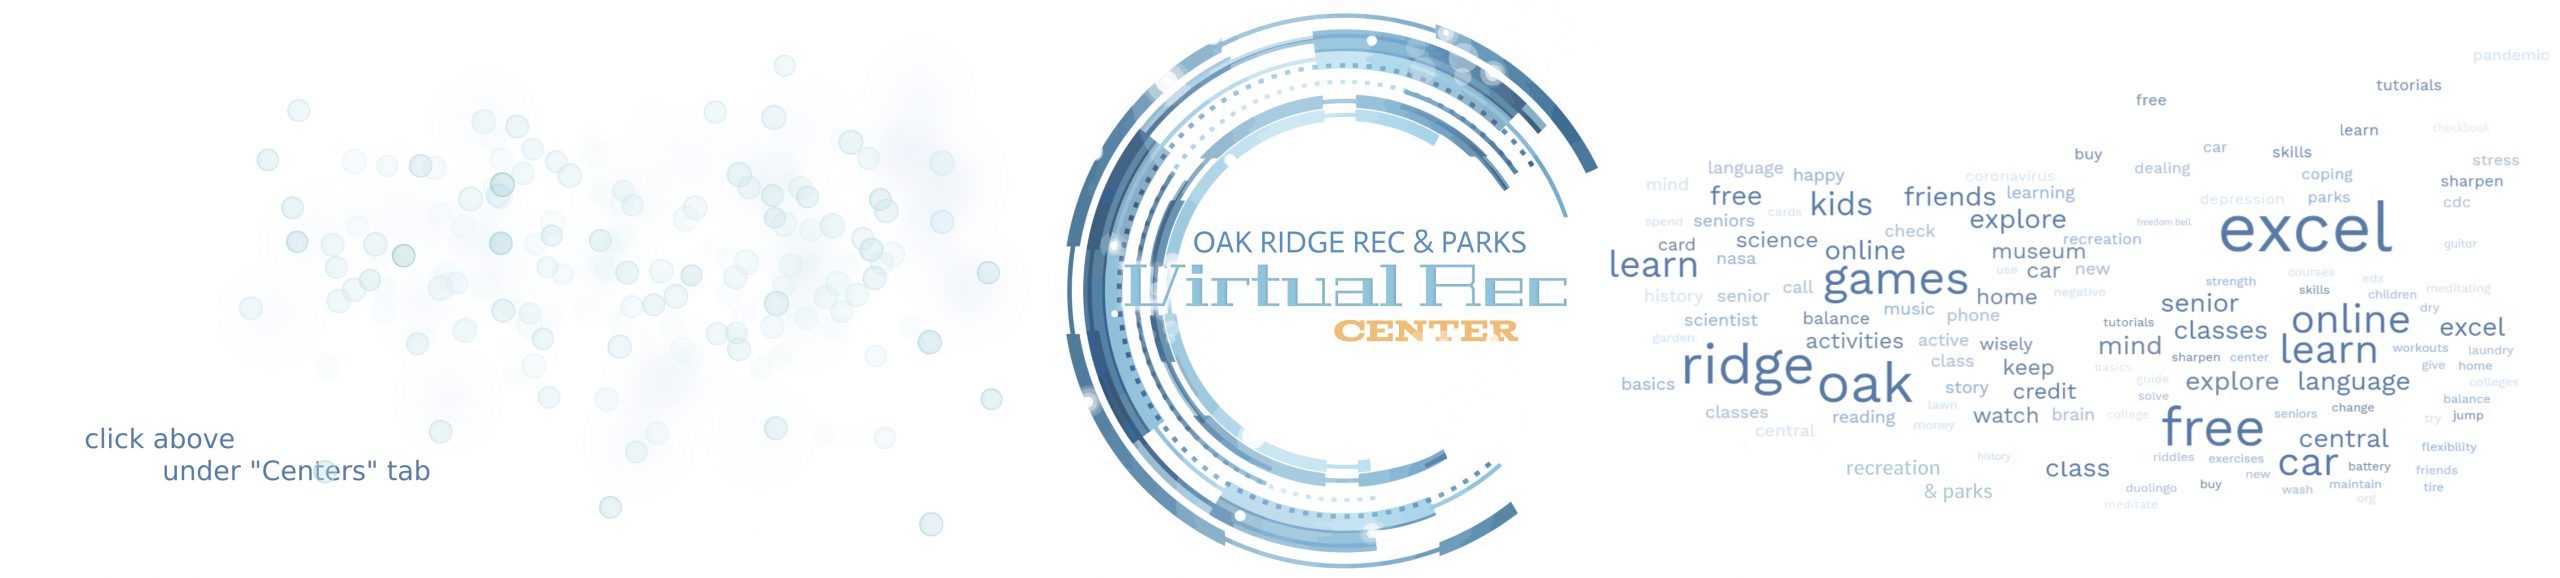 Virtual Rec Center Slide